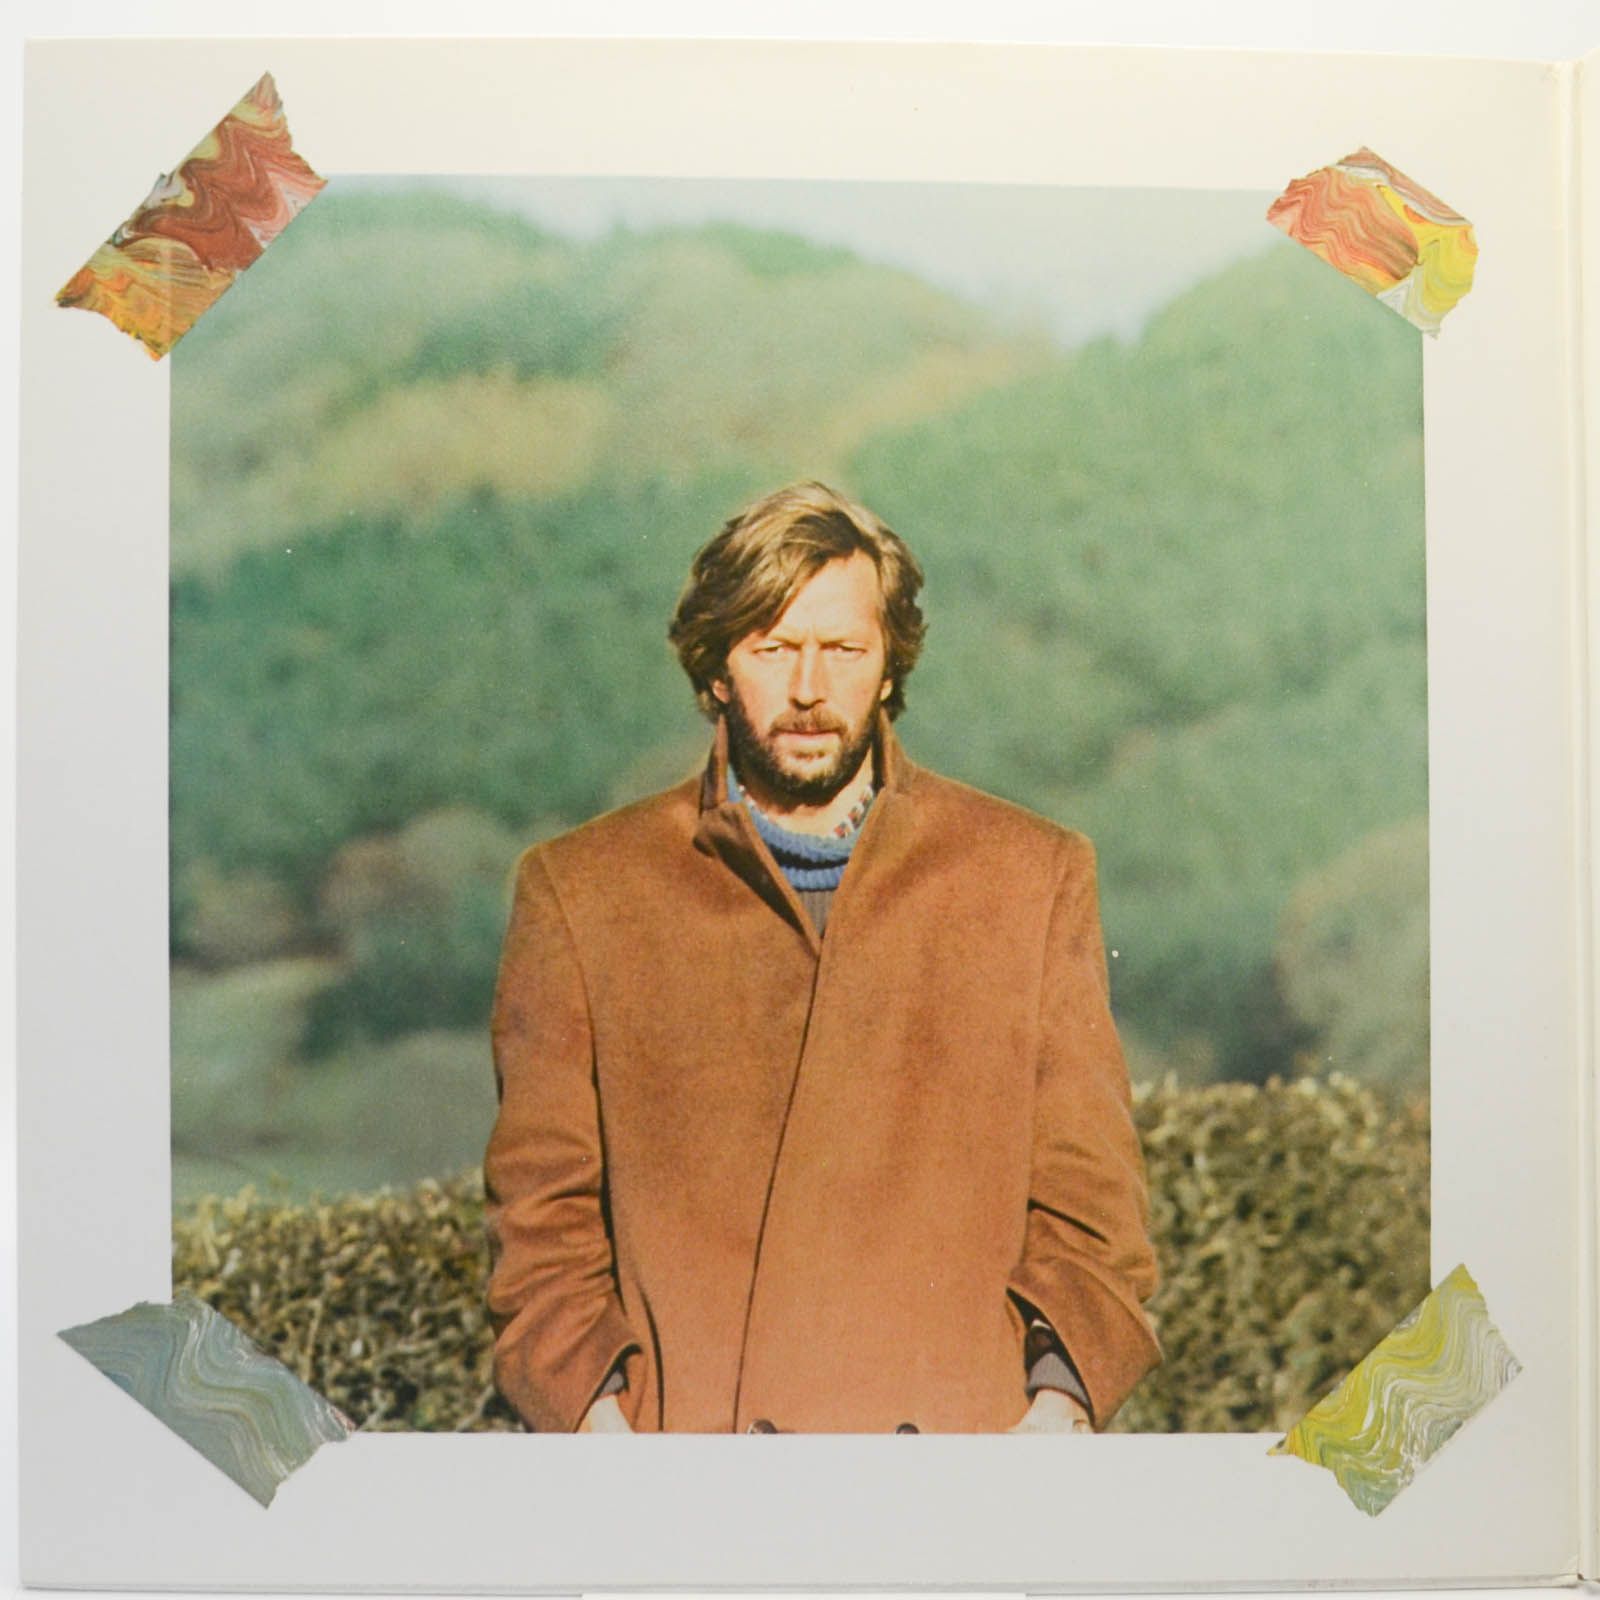 Eric Clapton — Behind The Sun, 1985